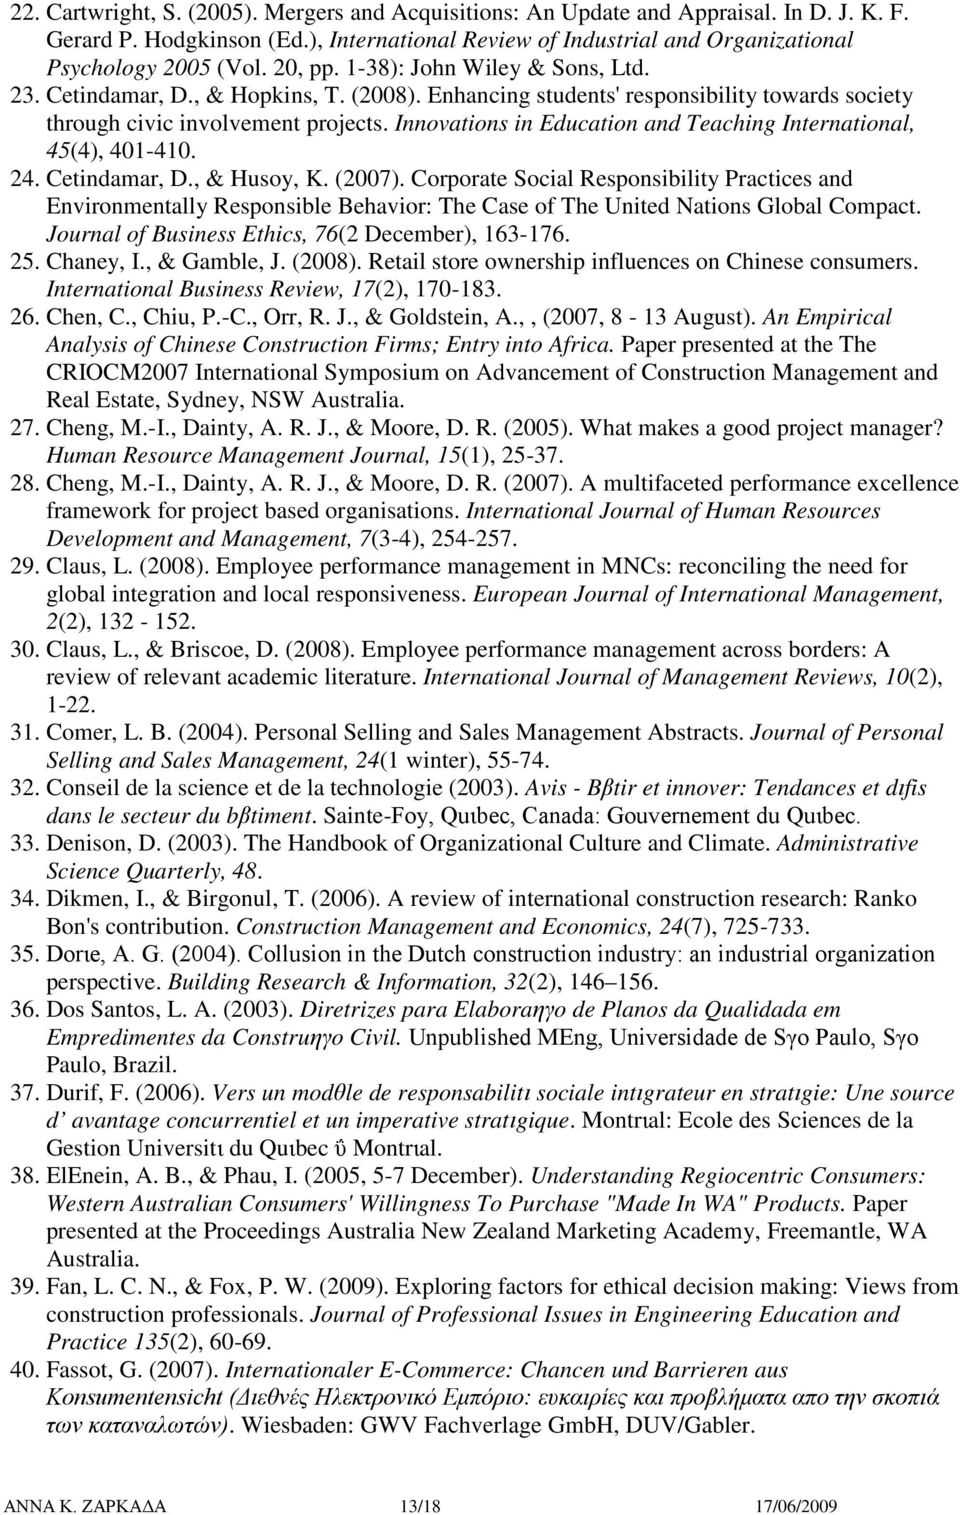 Innvatins in Educatin and Teaching Internatinal, 45(4), 401-410. 24. Cetindamar, D., & Husy, K. (2007).